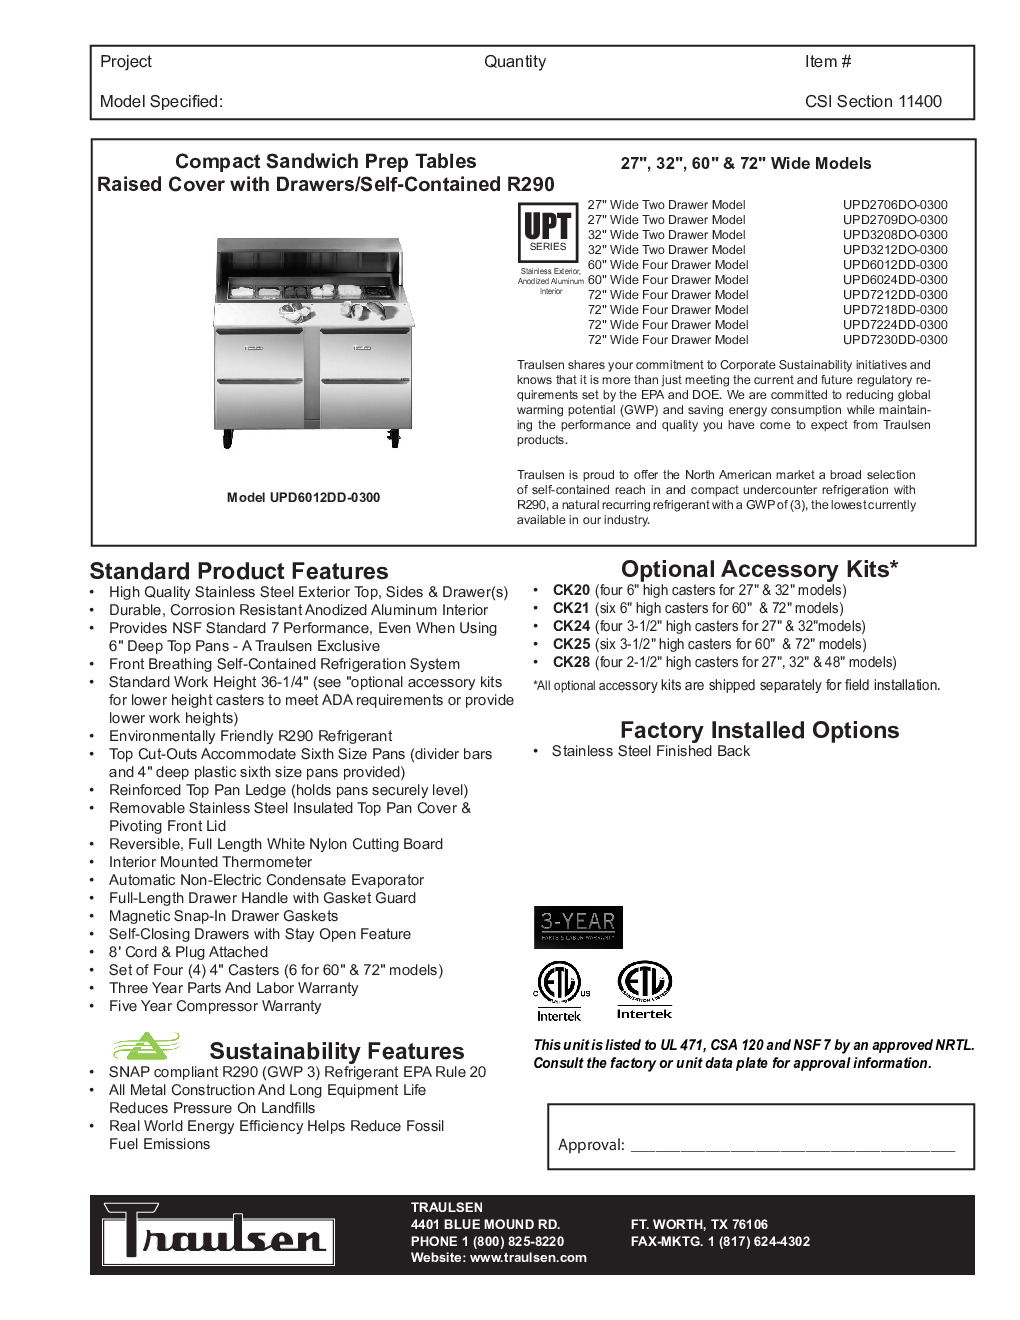 Traulsen UPD7218DD-0300 Sandwich / Salad Unit Refrigerated Counter